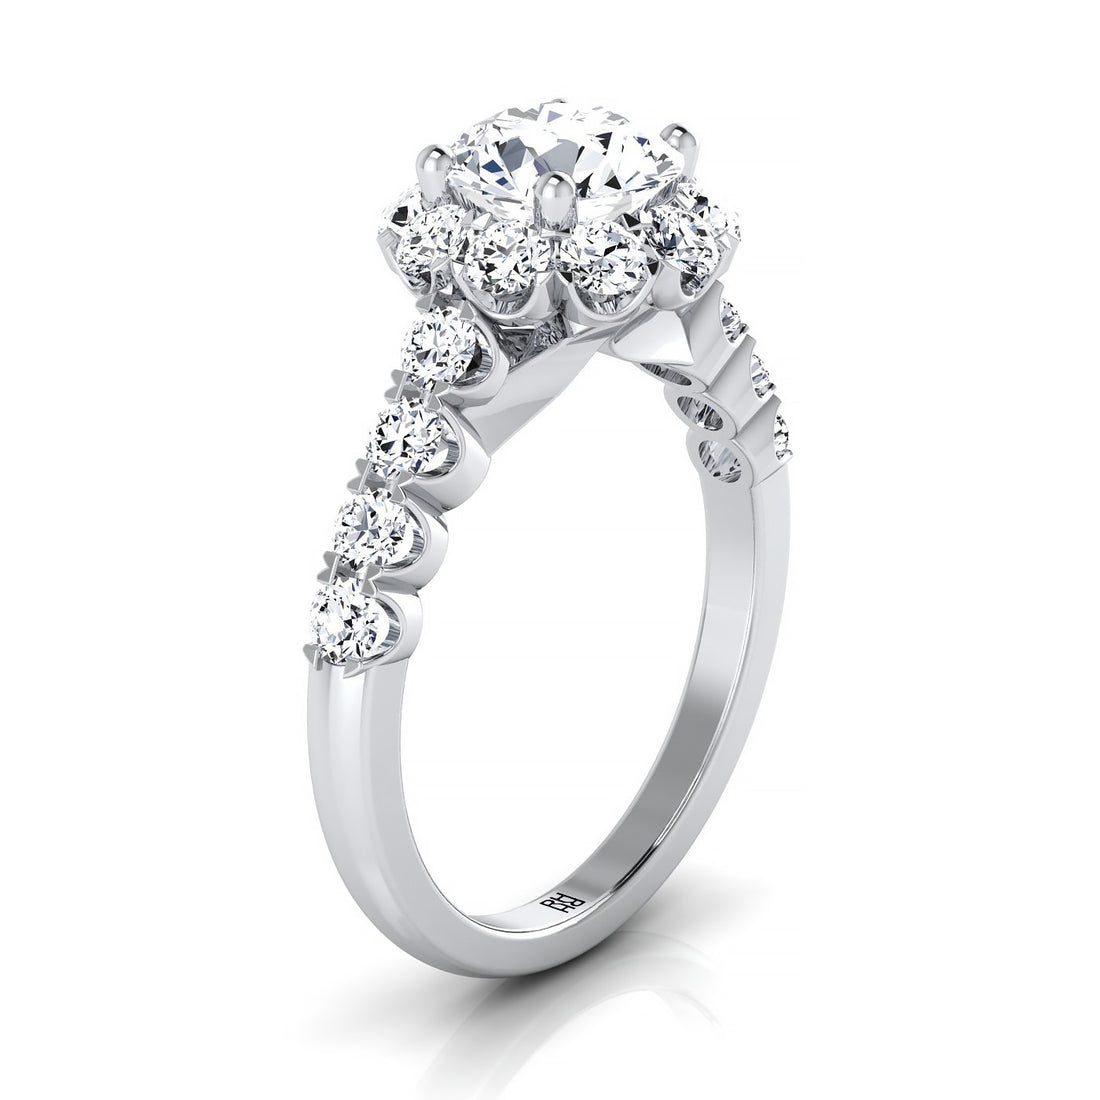 Design Ideas for Flower Shaped Diamond Engagement Ring